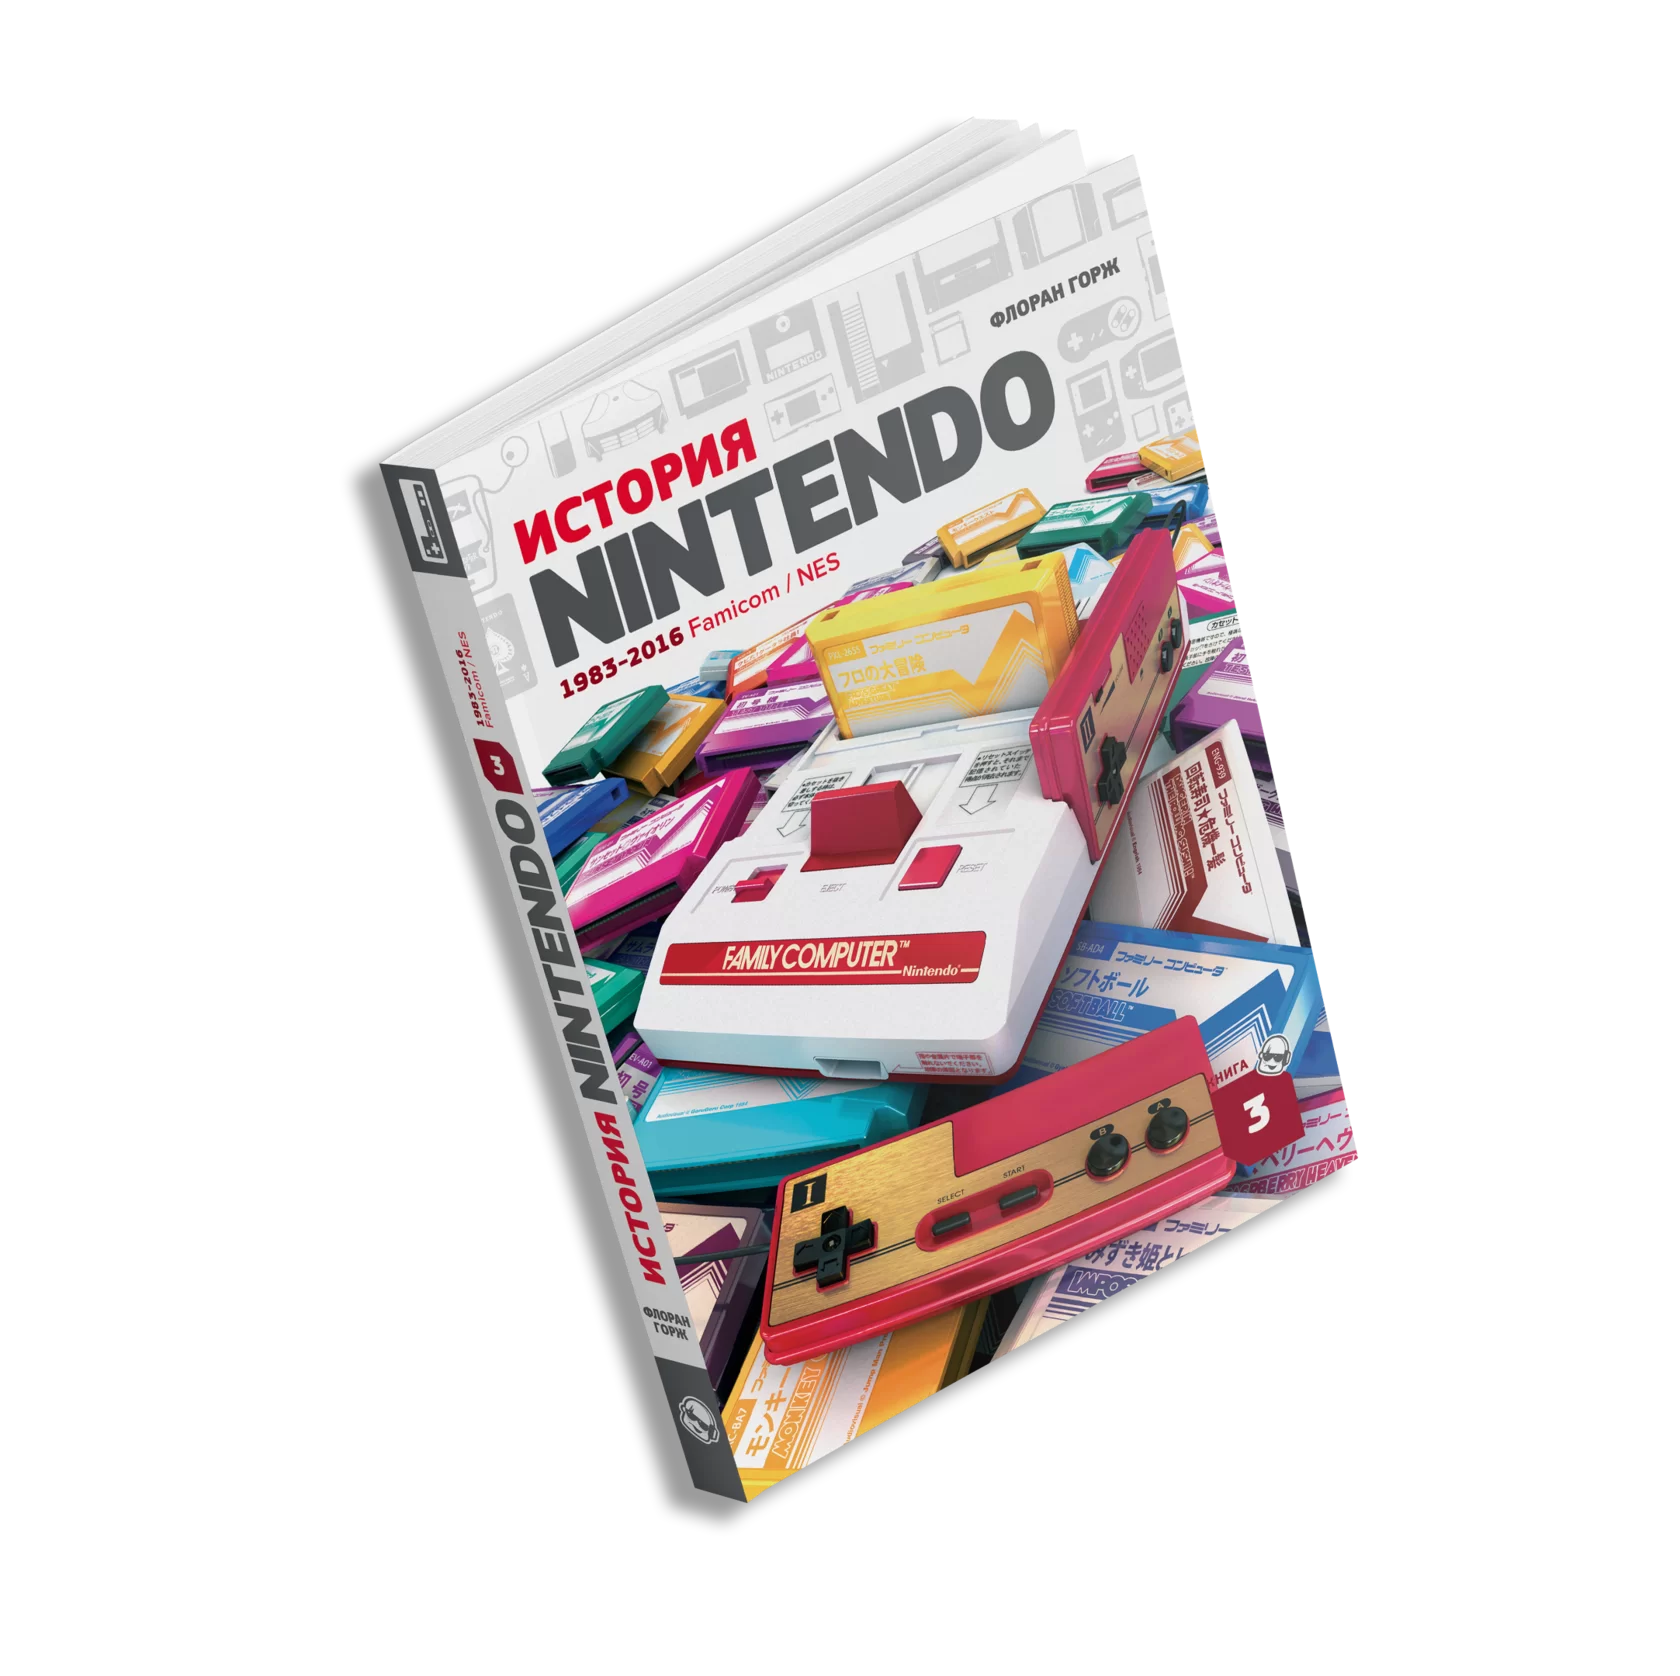 Нинтендо 1983. История Nintendo 1983-2016 книга. Книга Nintendo. История Nintendo книга.